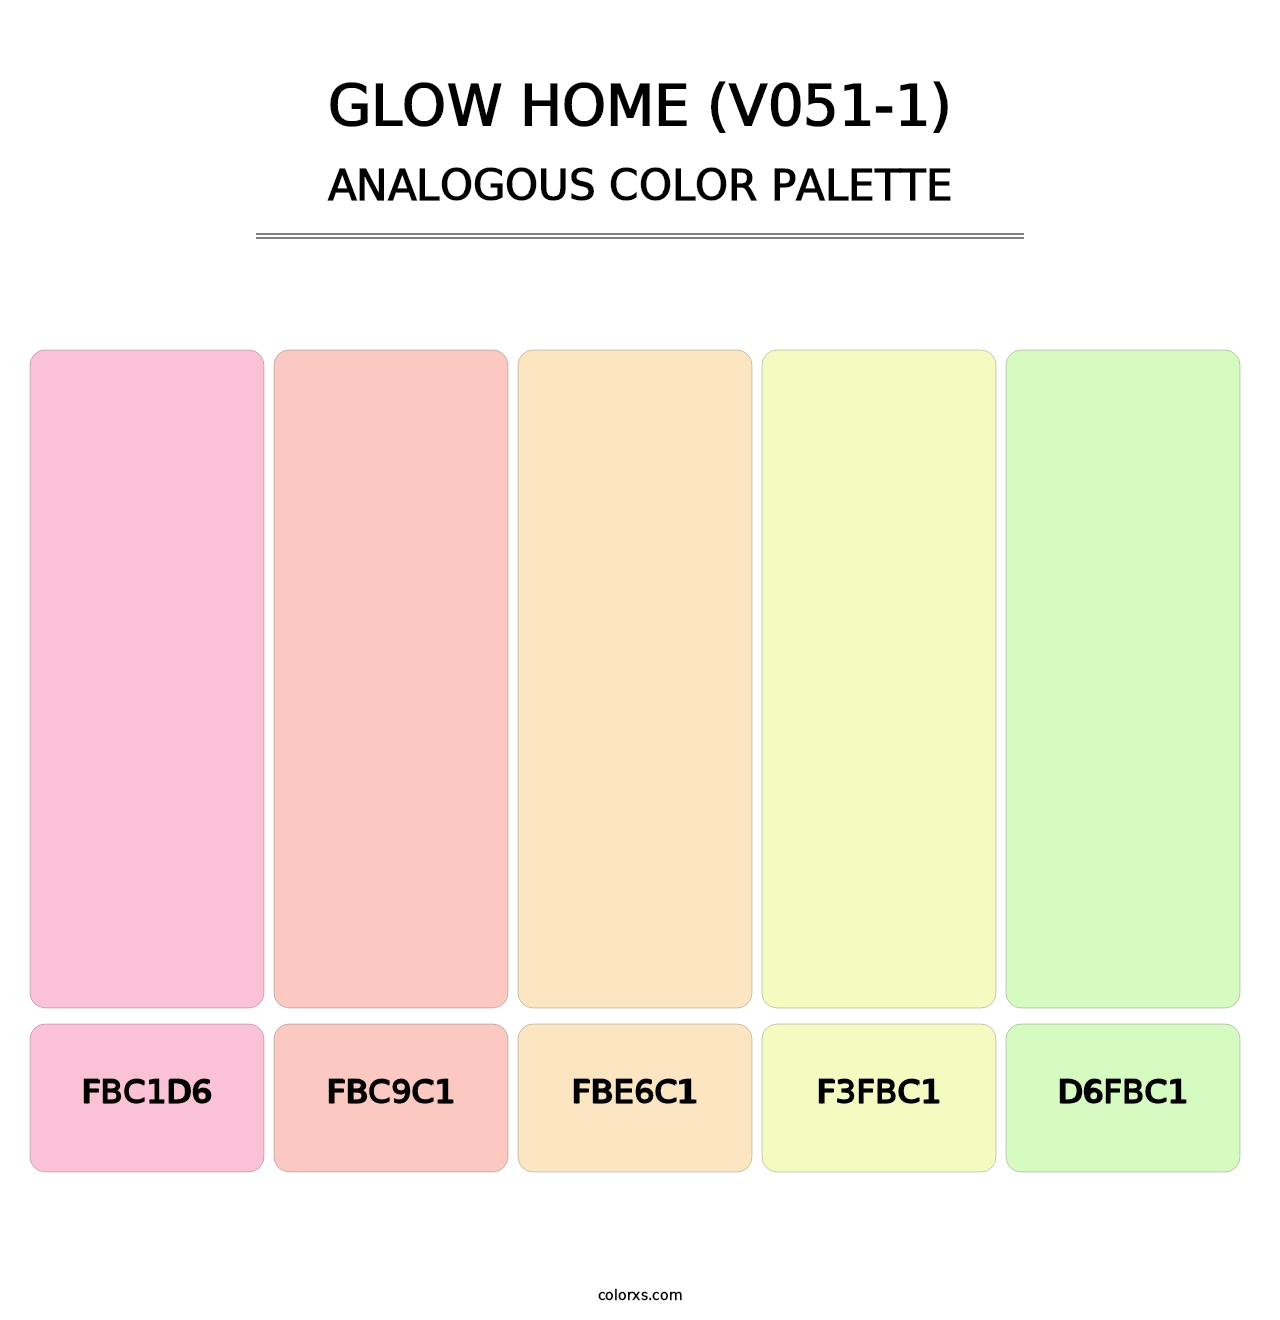 Glow Home (V051-1) - Analogous Color Palette